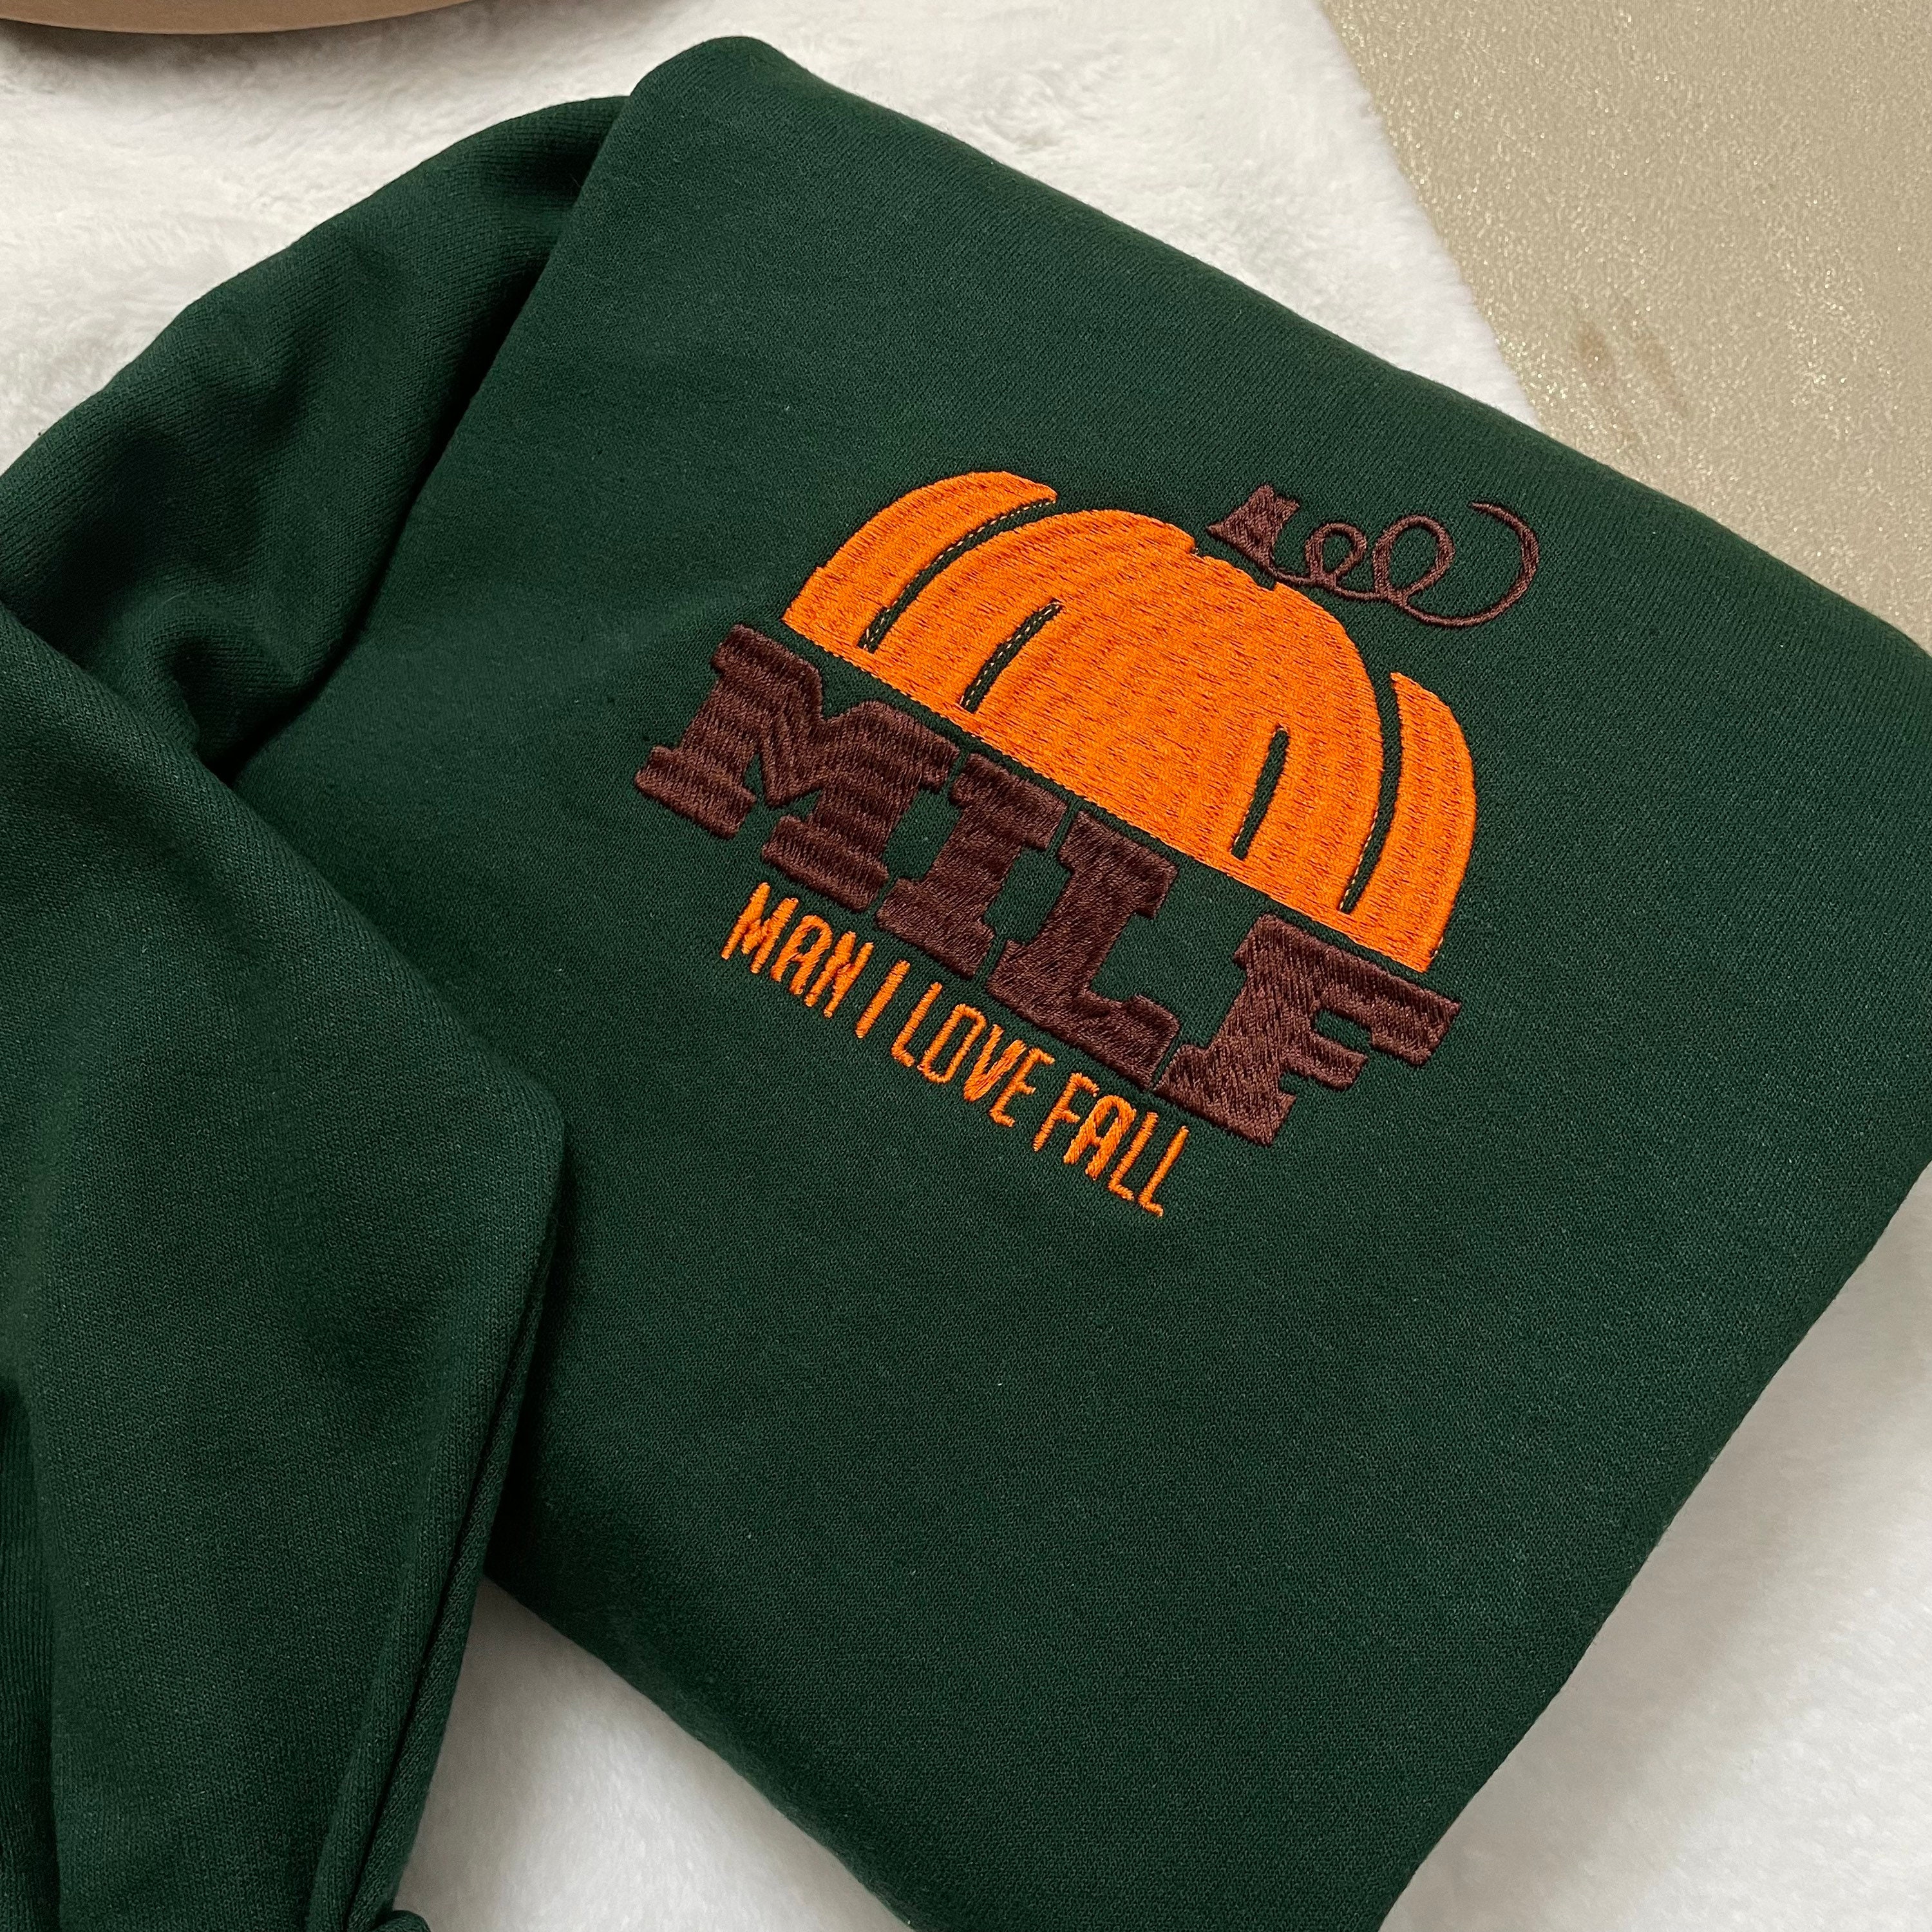 Discover MILF Man I Love Fall Embroidered Sweatshirt - Fall Clothing - Women's Fashion - Mom - Pumpkin season - spooky season - Embroidered clothing